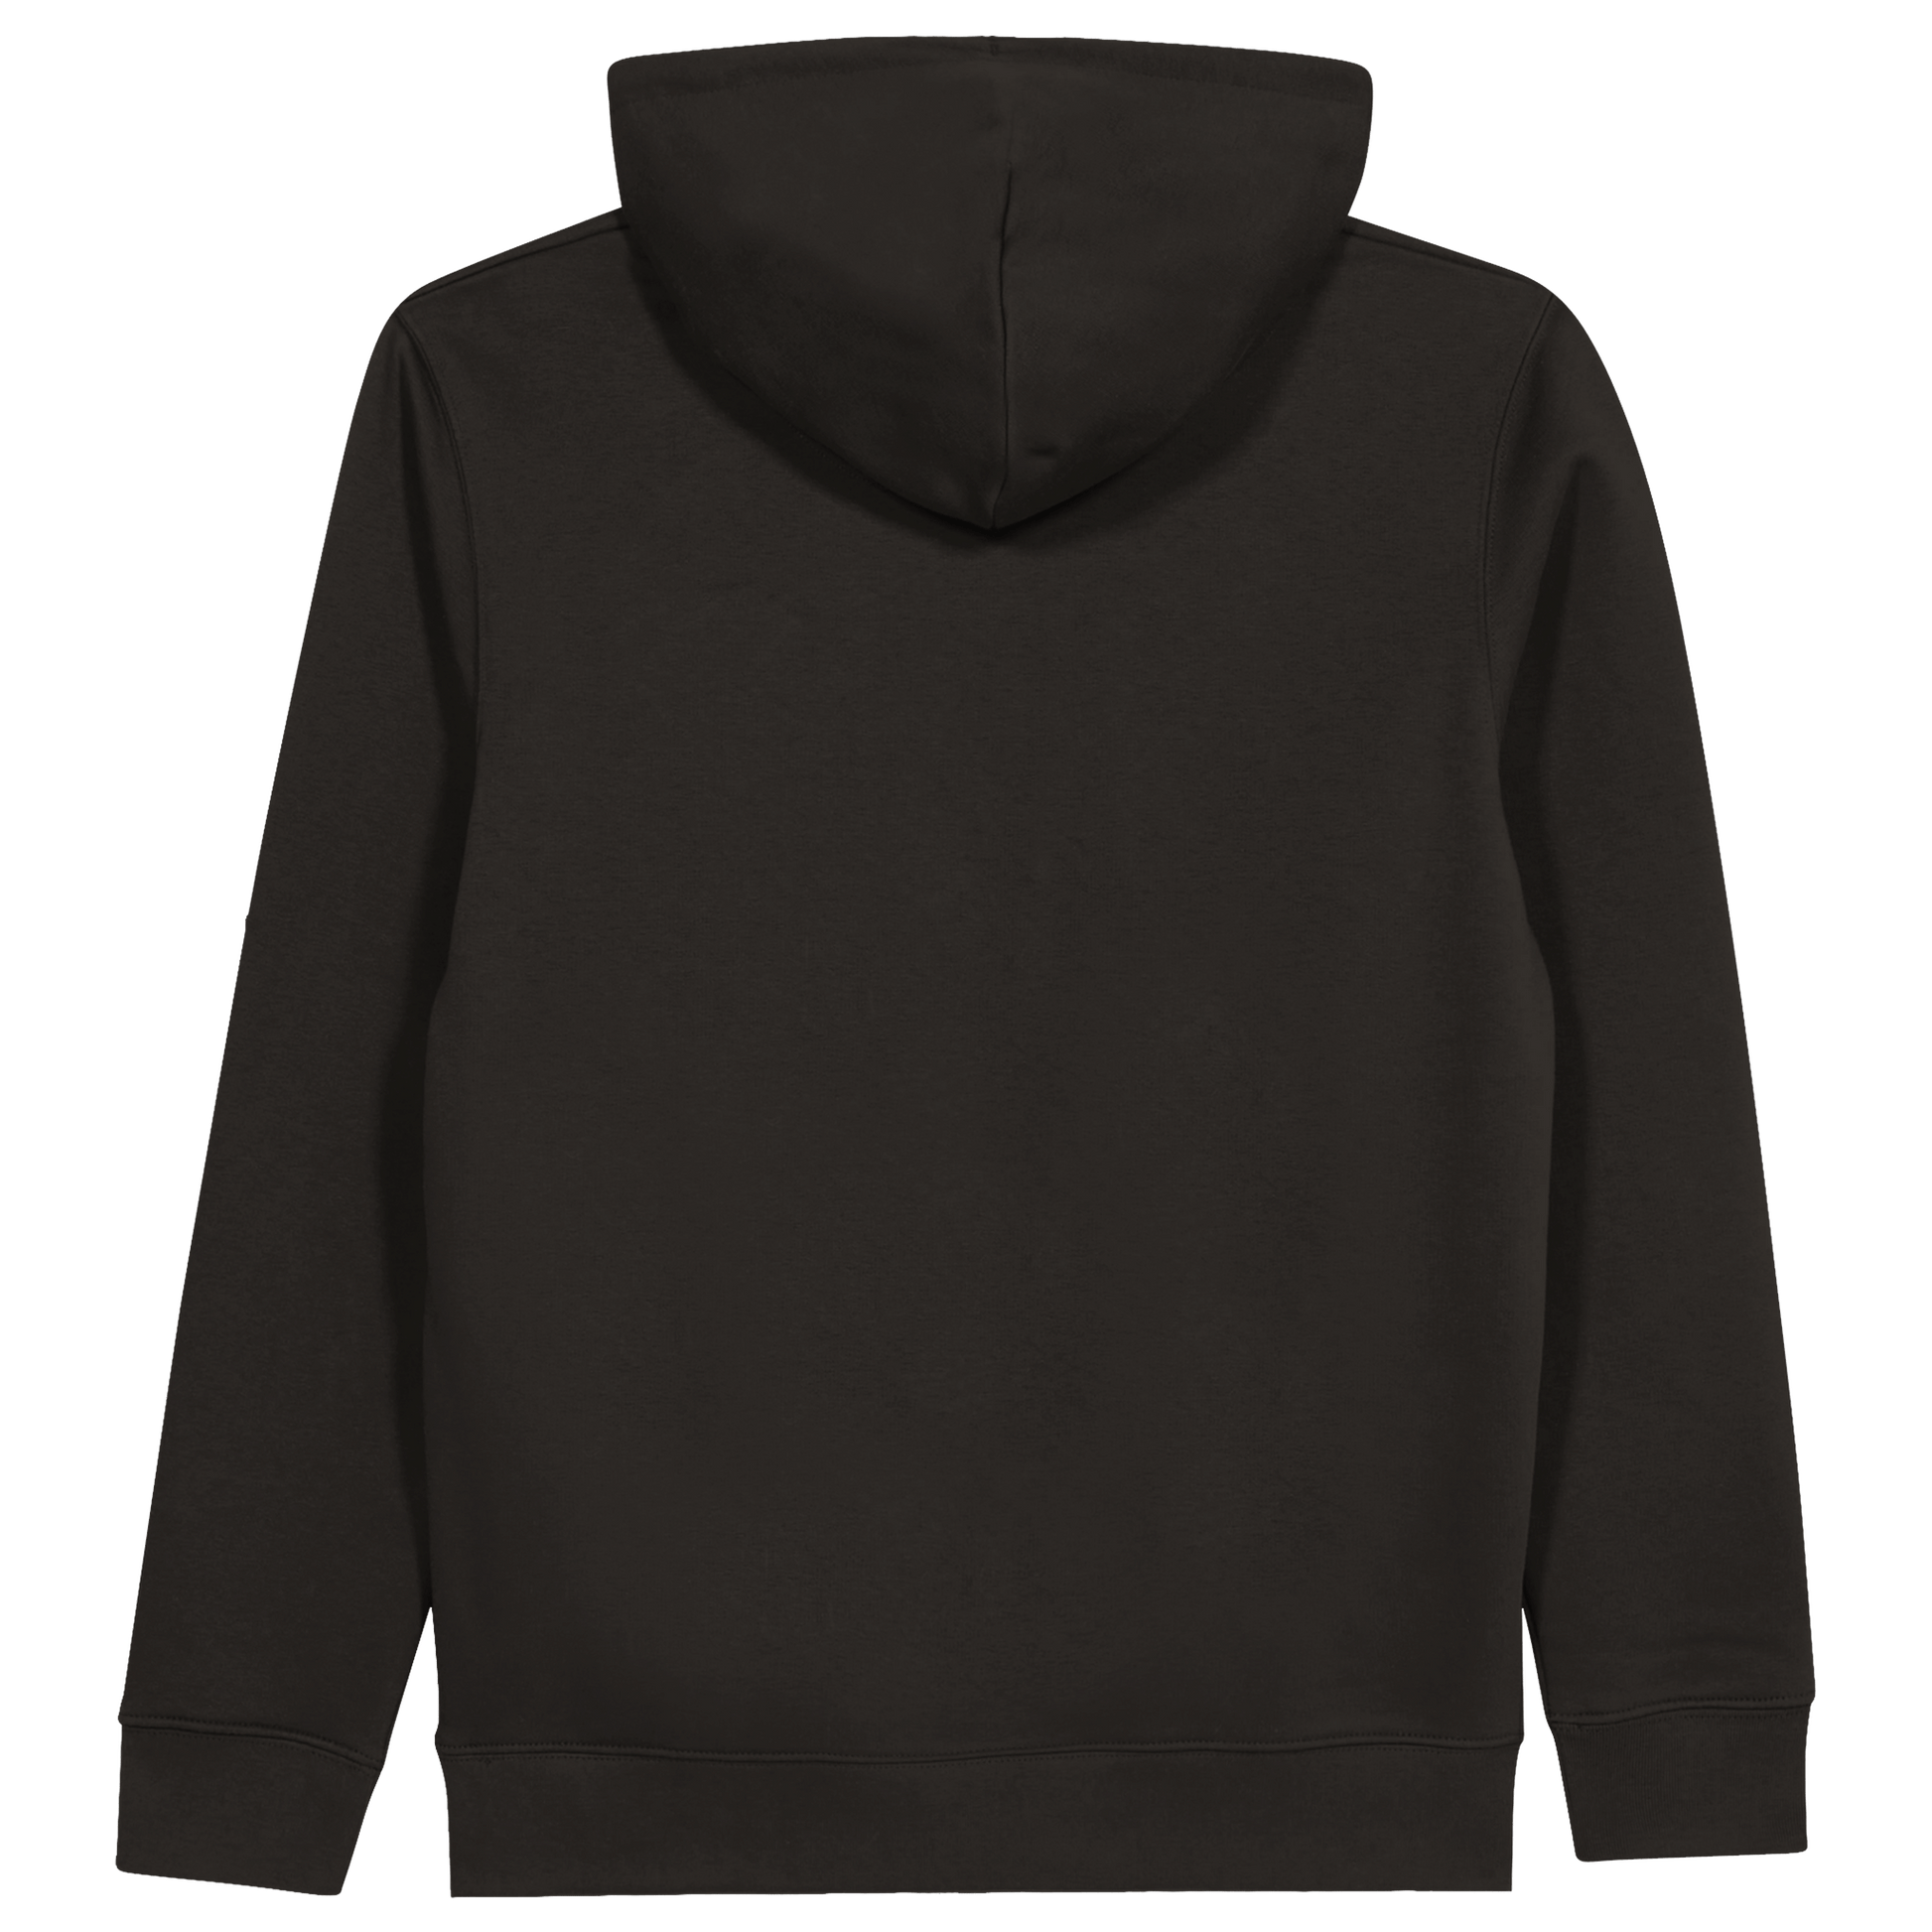 L.O.V.E - Organic Unisex Pullover Hoodie apparel